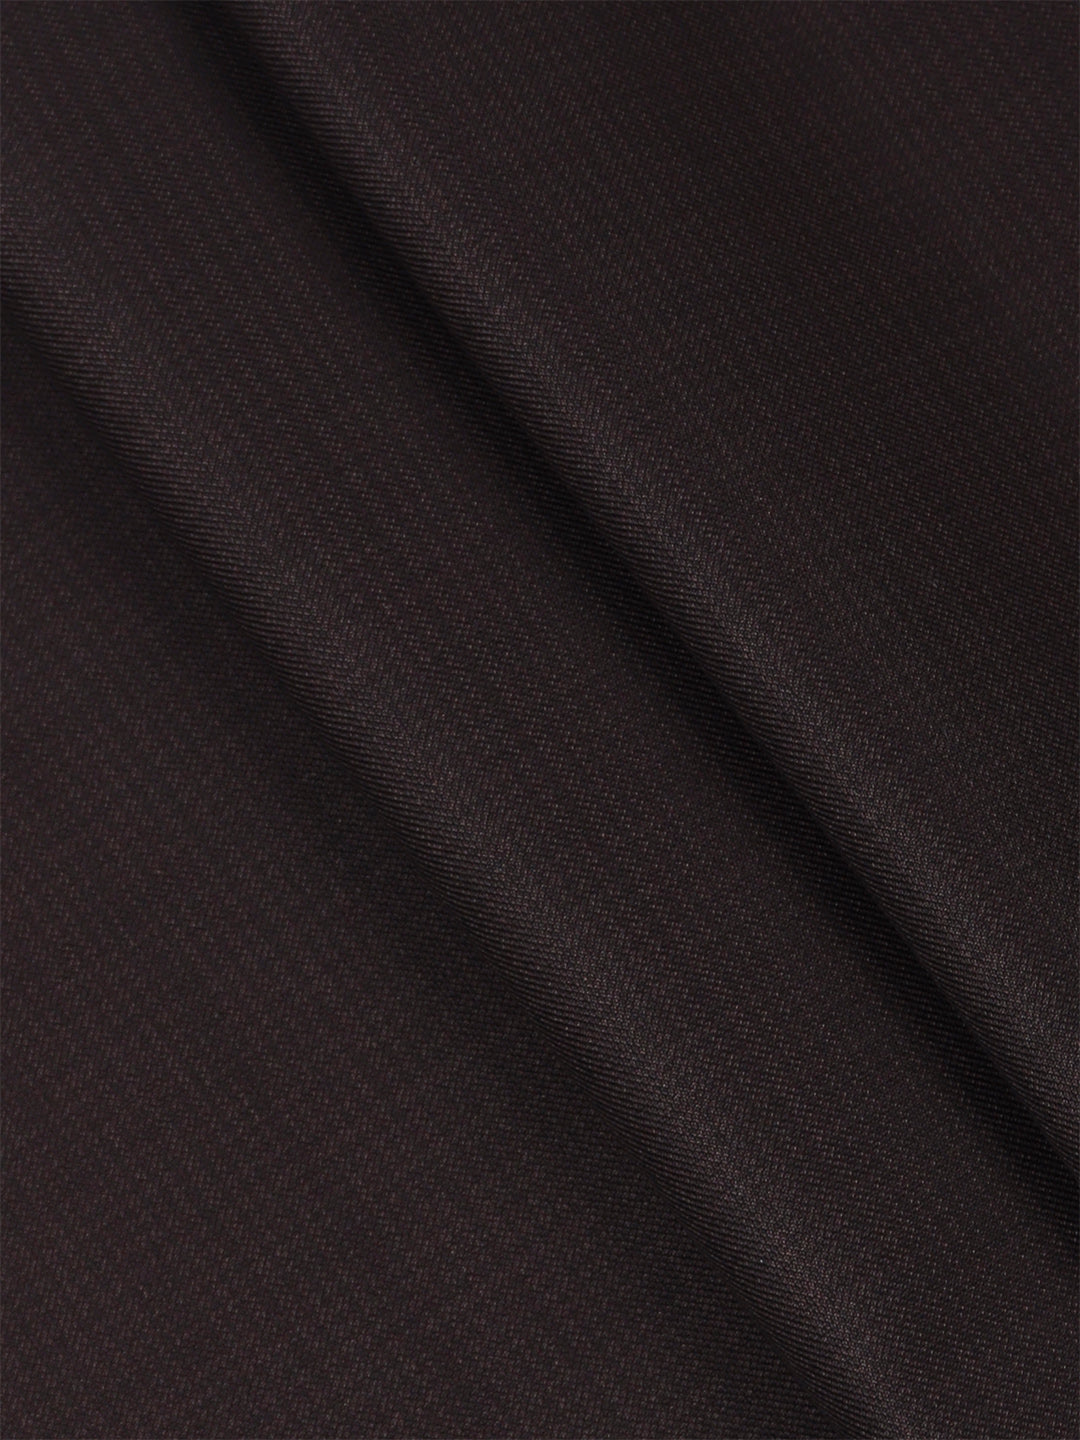 Cotton Blended Dark Brown Premium Suiting Fabric-Golden Days